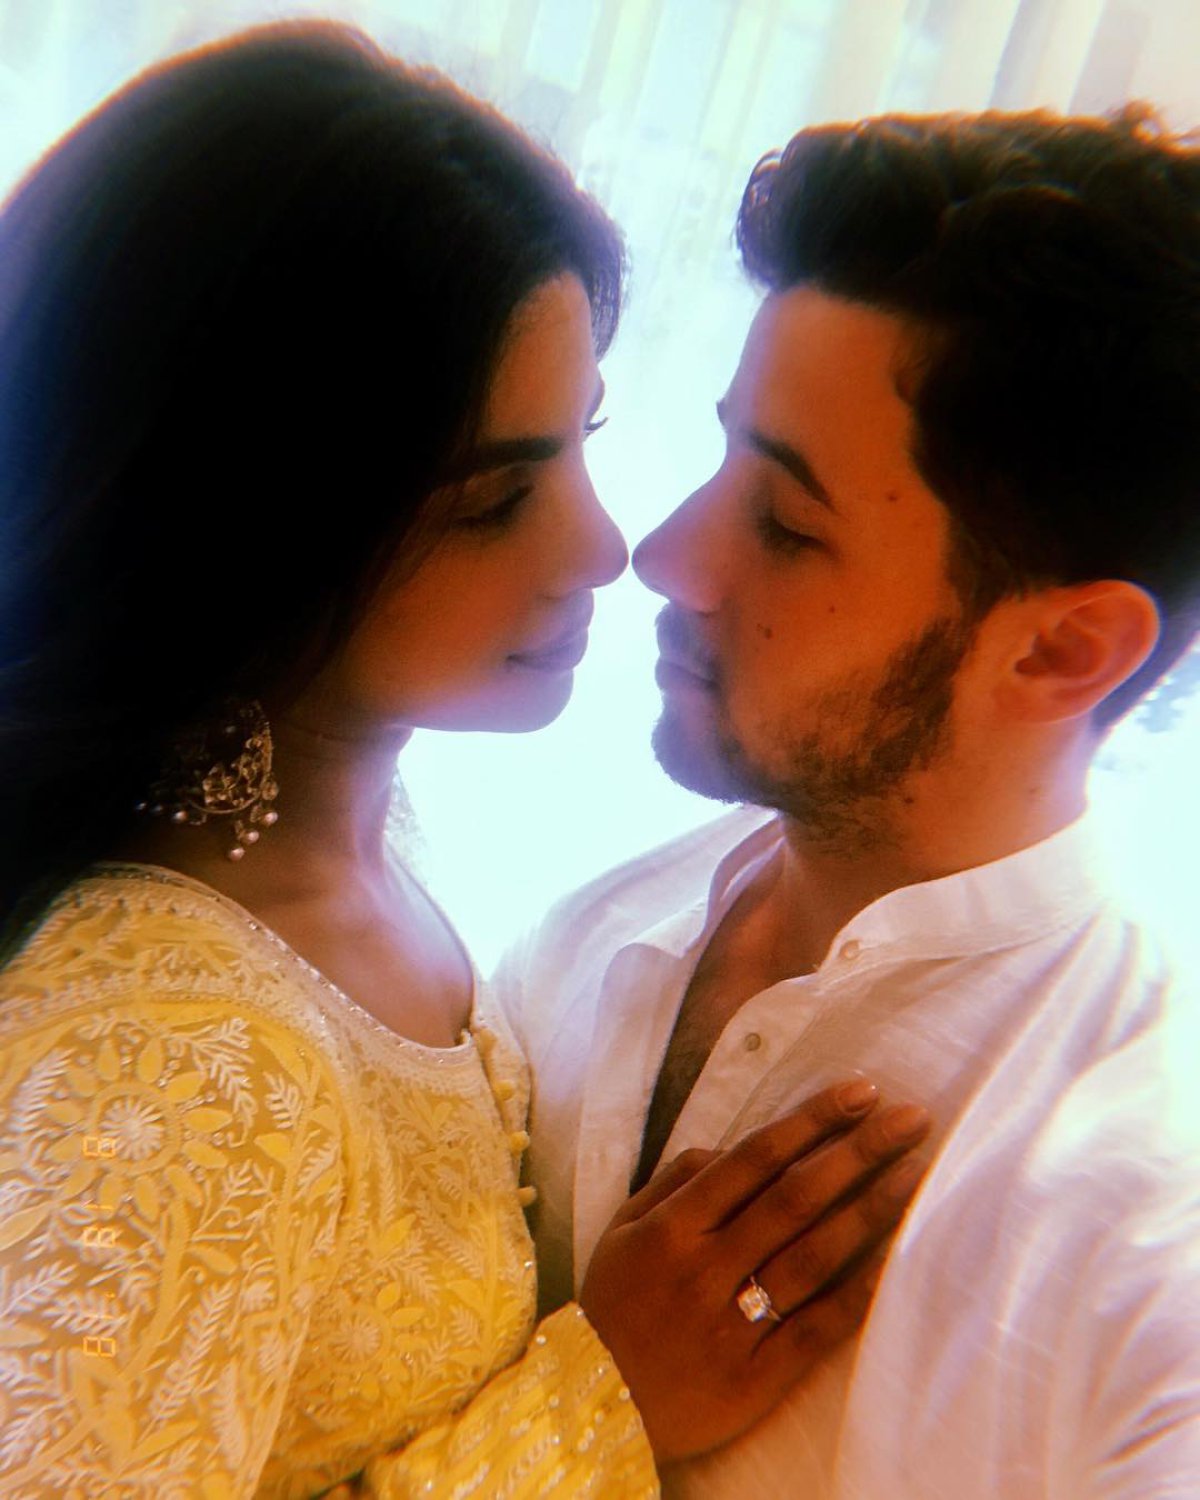 La boda no real: Nick Jonas y Priyanka Chopra